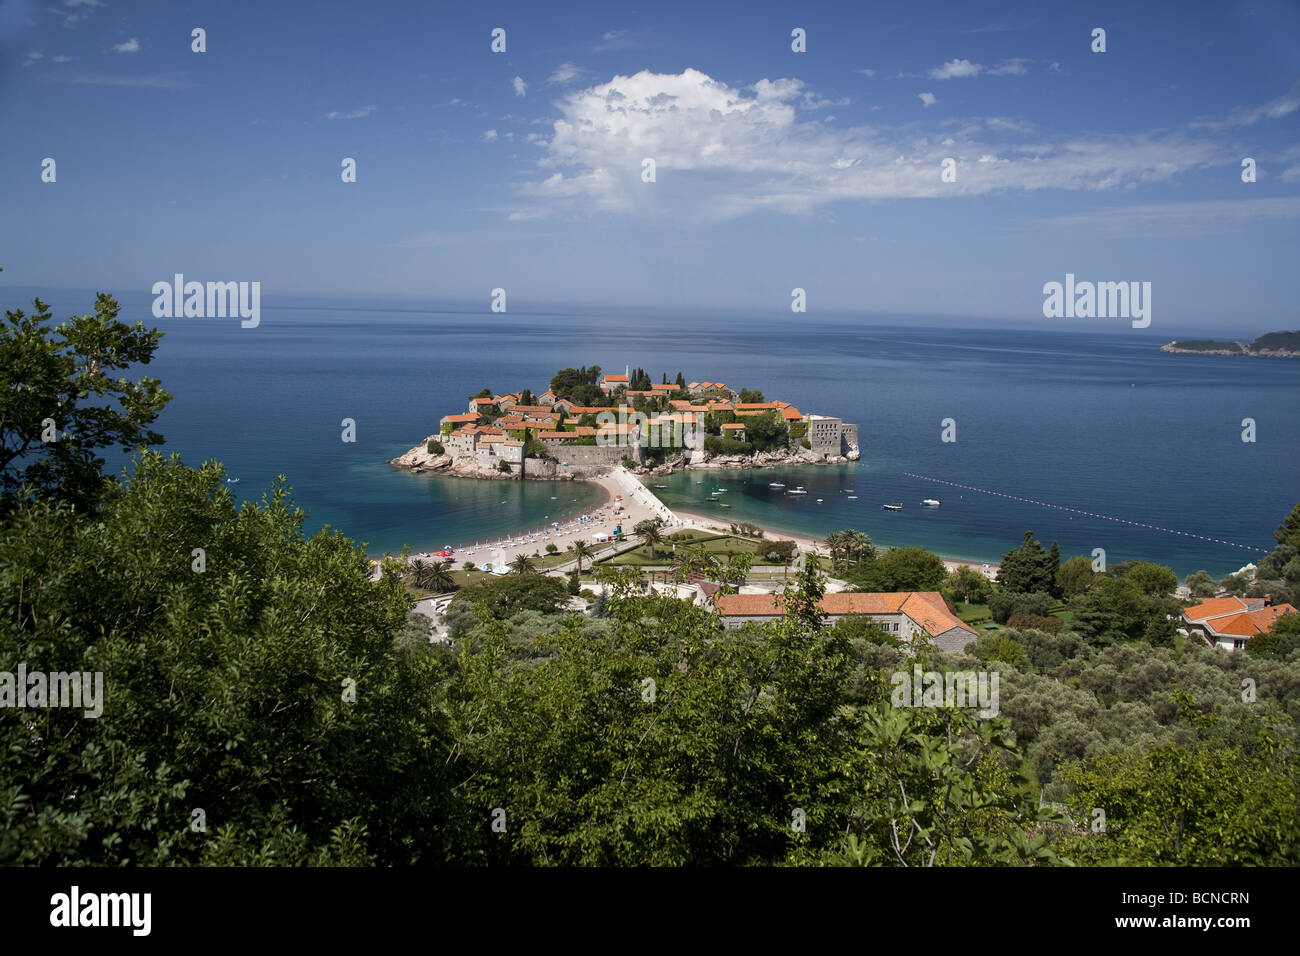 L'Hotel Peninsula Sveti Stefan, Montenegro, Mare Adriatico, coast resort Foto Stock